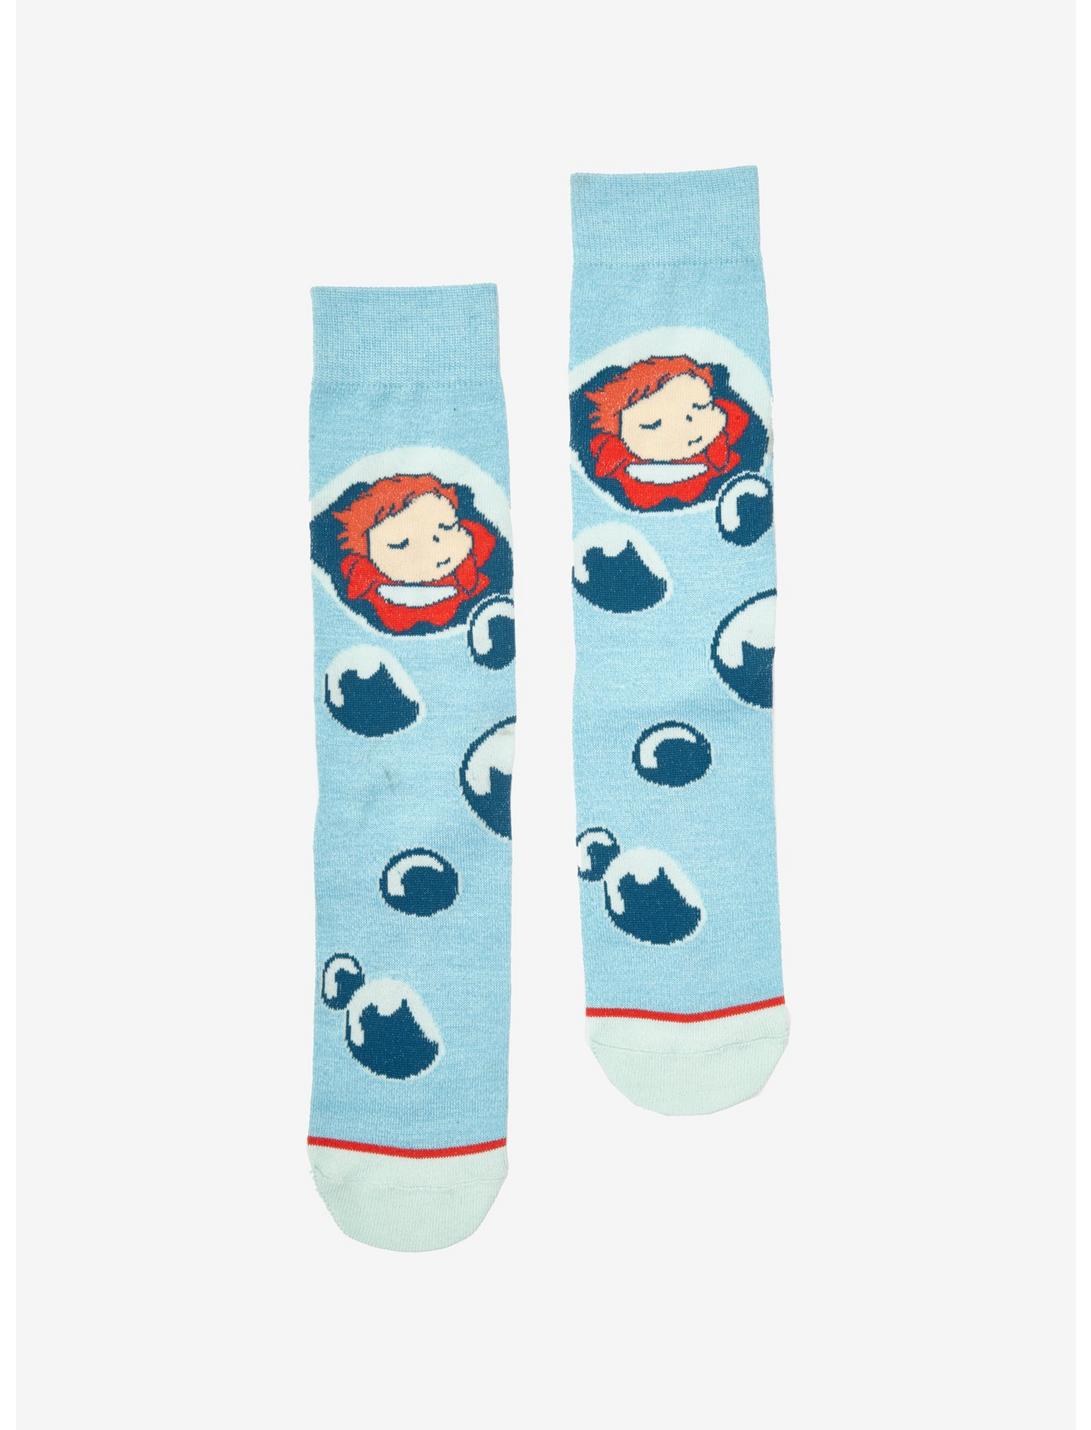 Studio Ghibli Ponyo Bubbles Socks, , hi-res